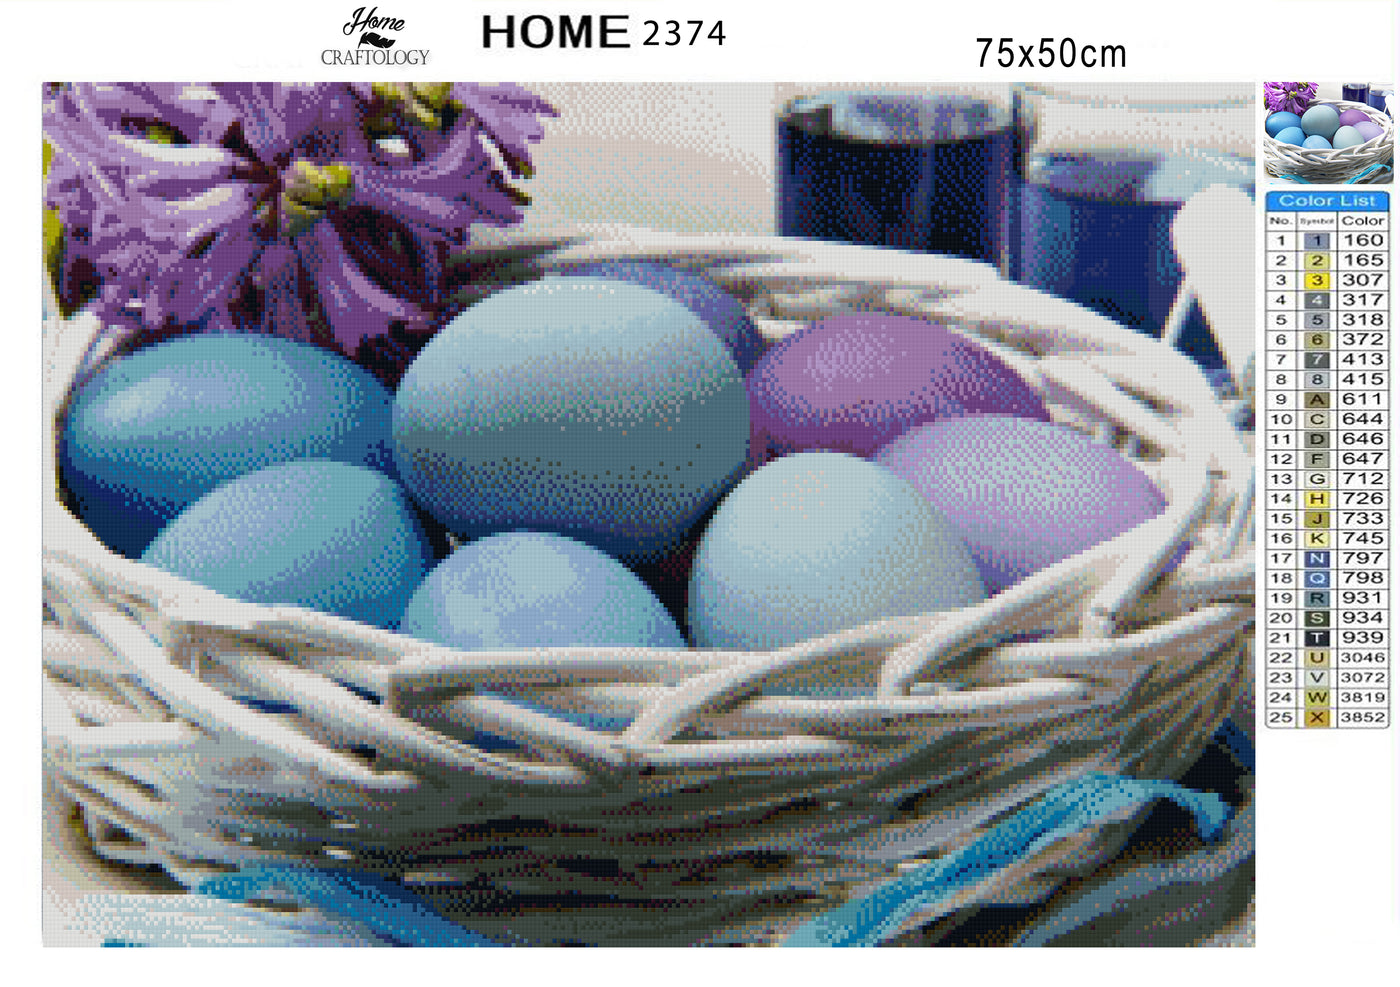 Pastel Colored Eggs - Premium Diamond Painting Kit